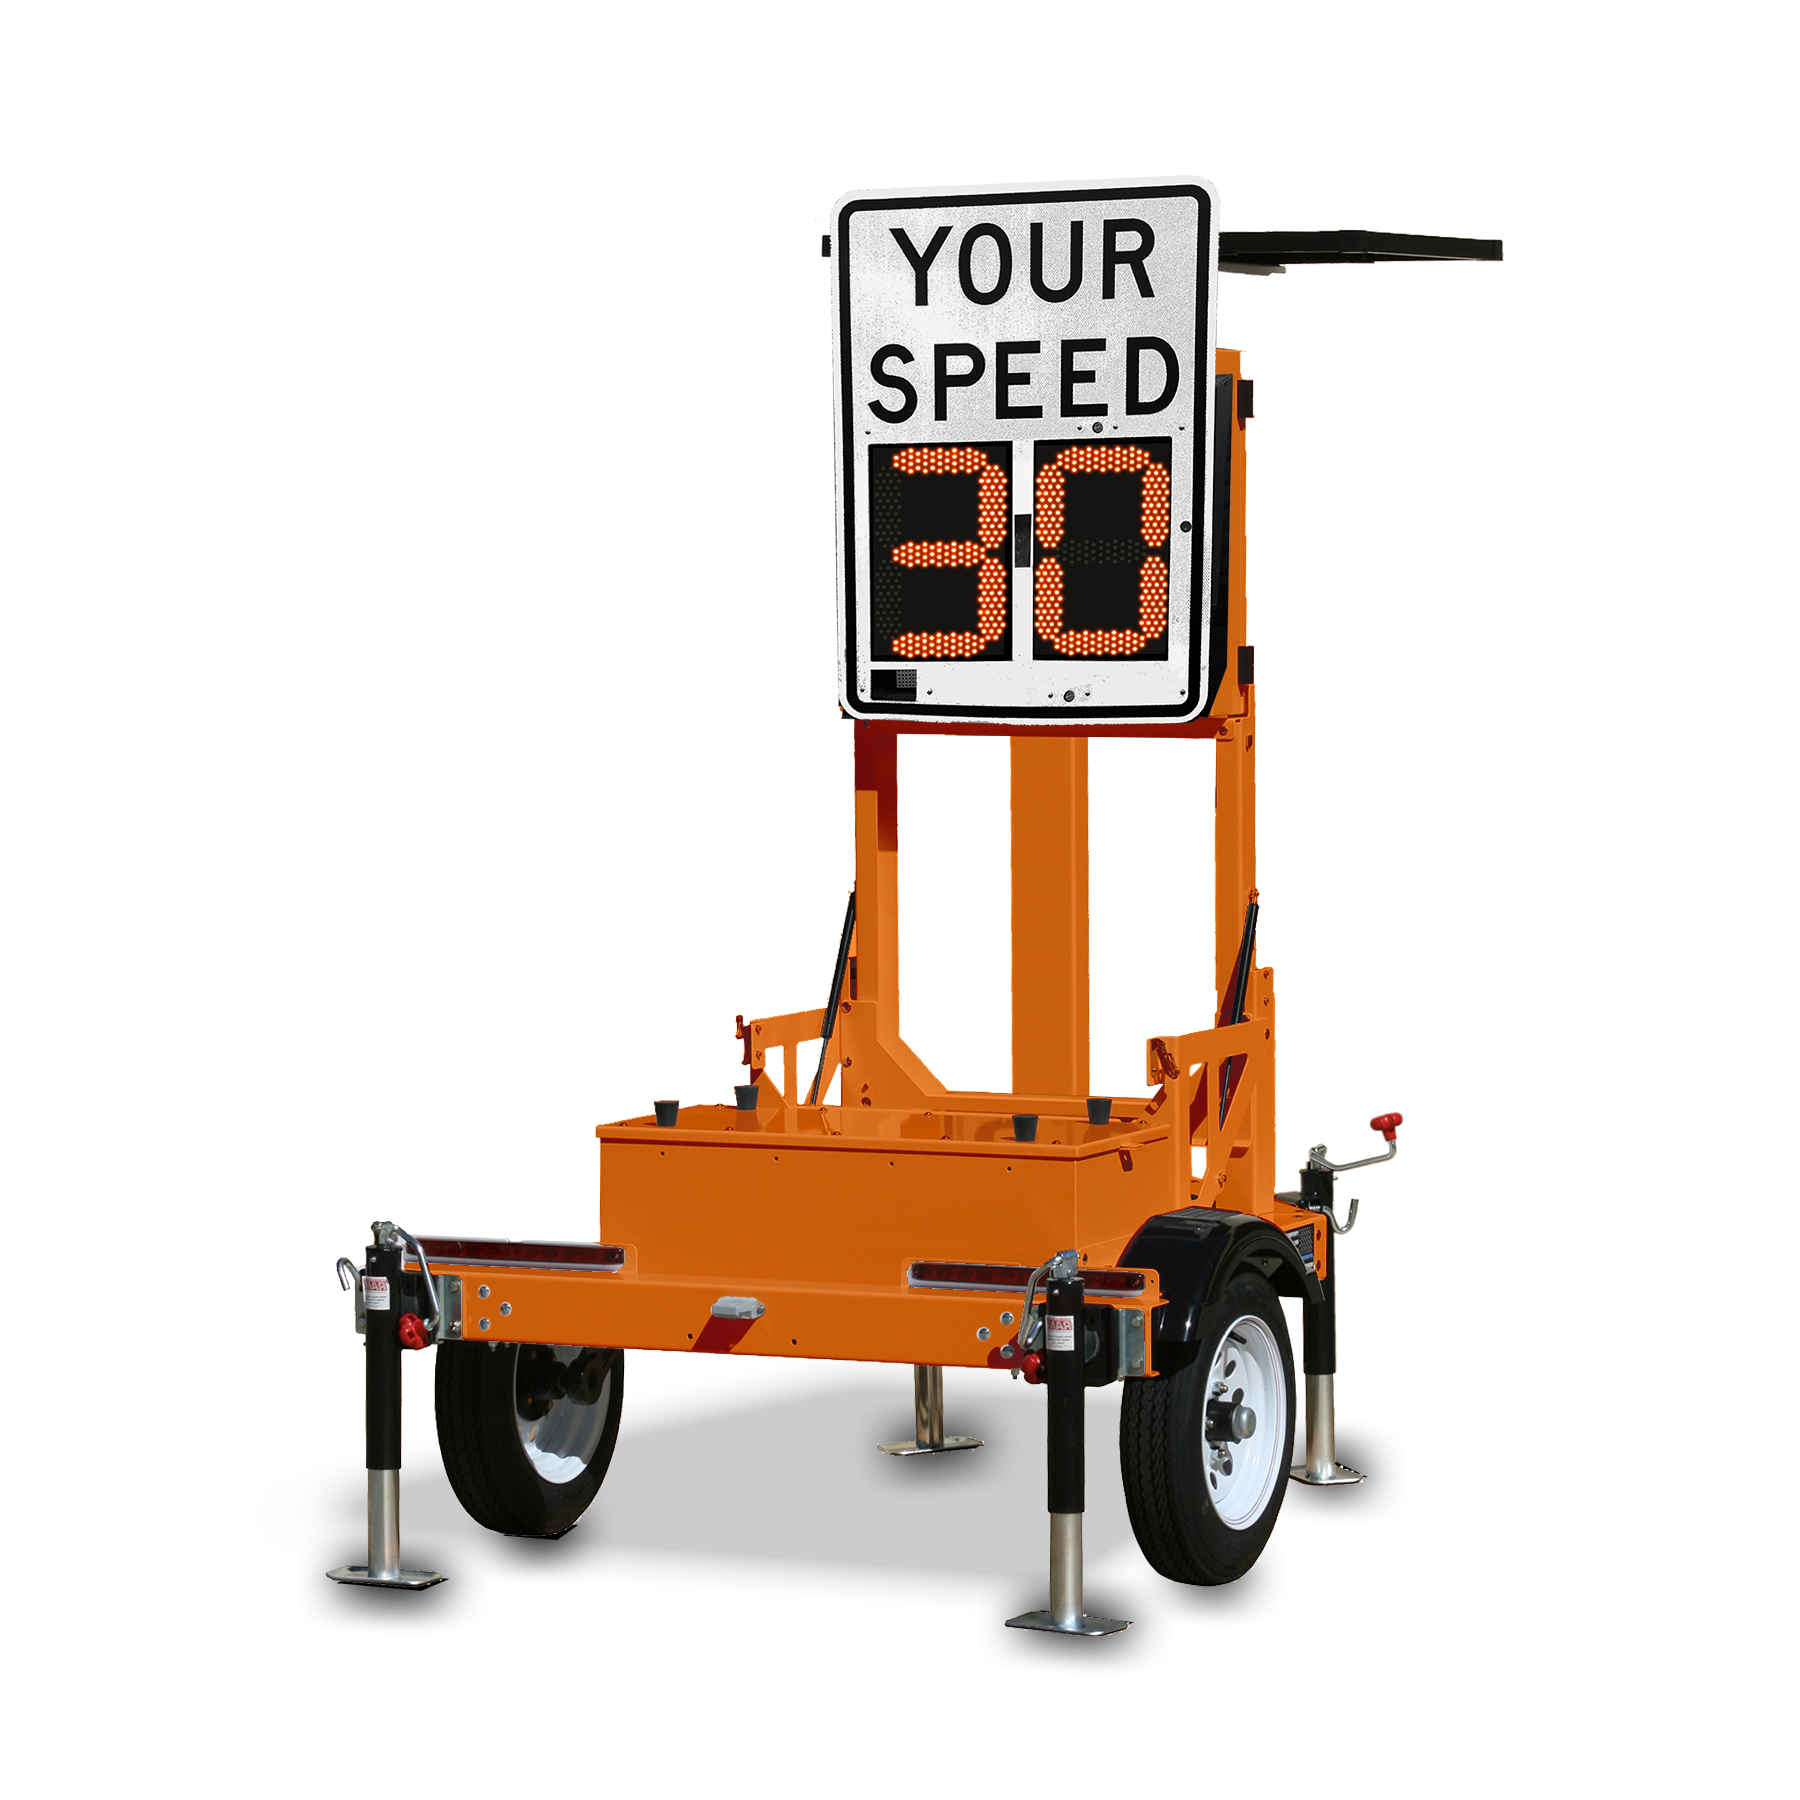 VCalm®TSR-L18 Small Trailer with VCalm®L18 Lightweight Speed Feedback Radar Sign (Orange)